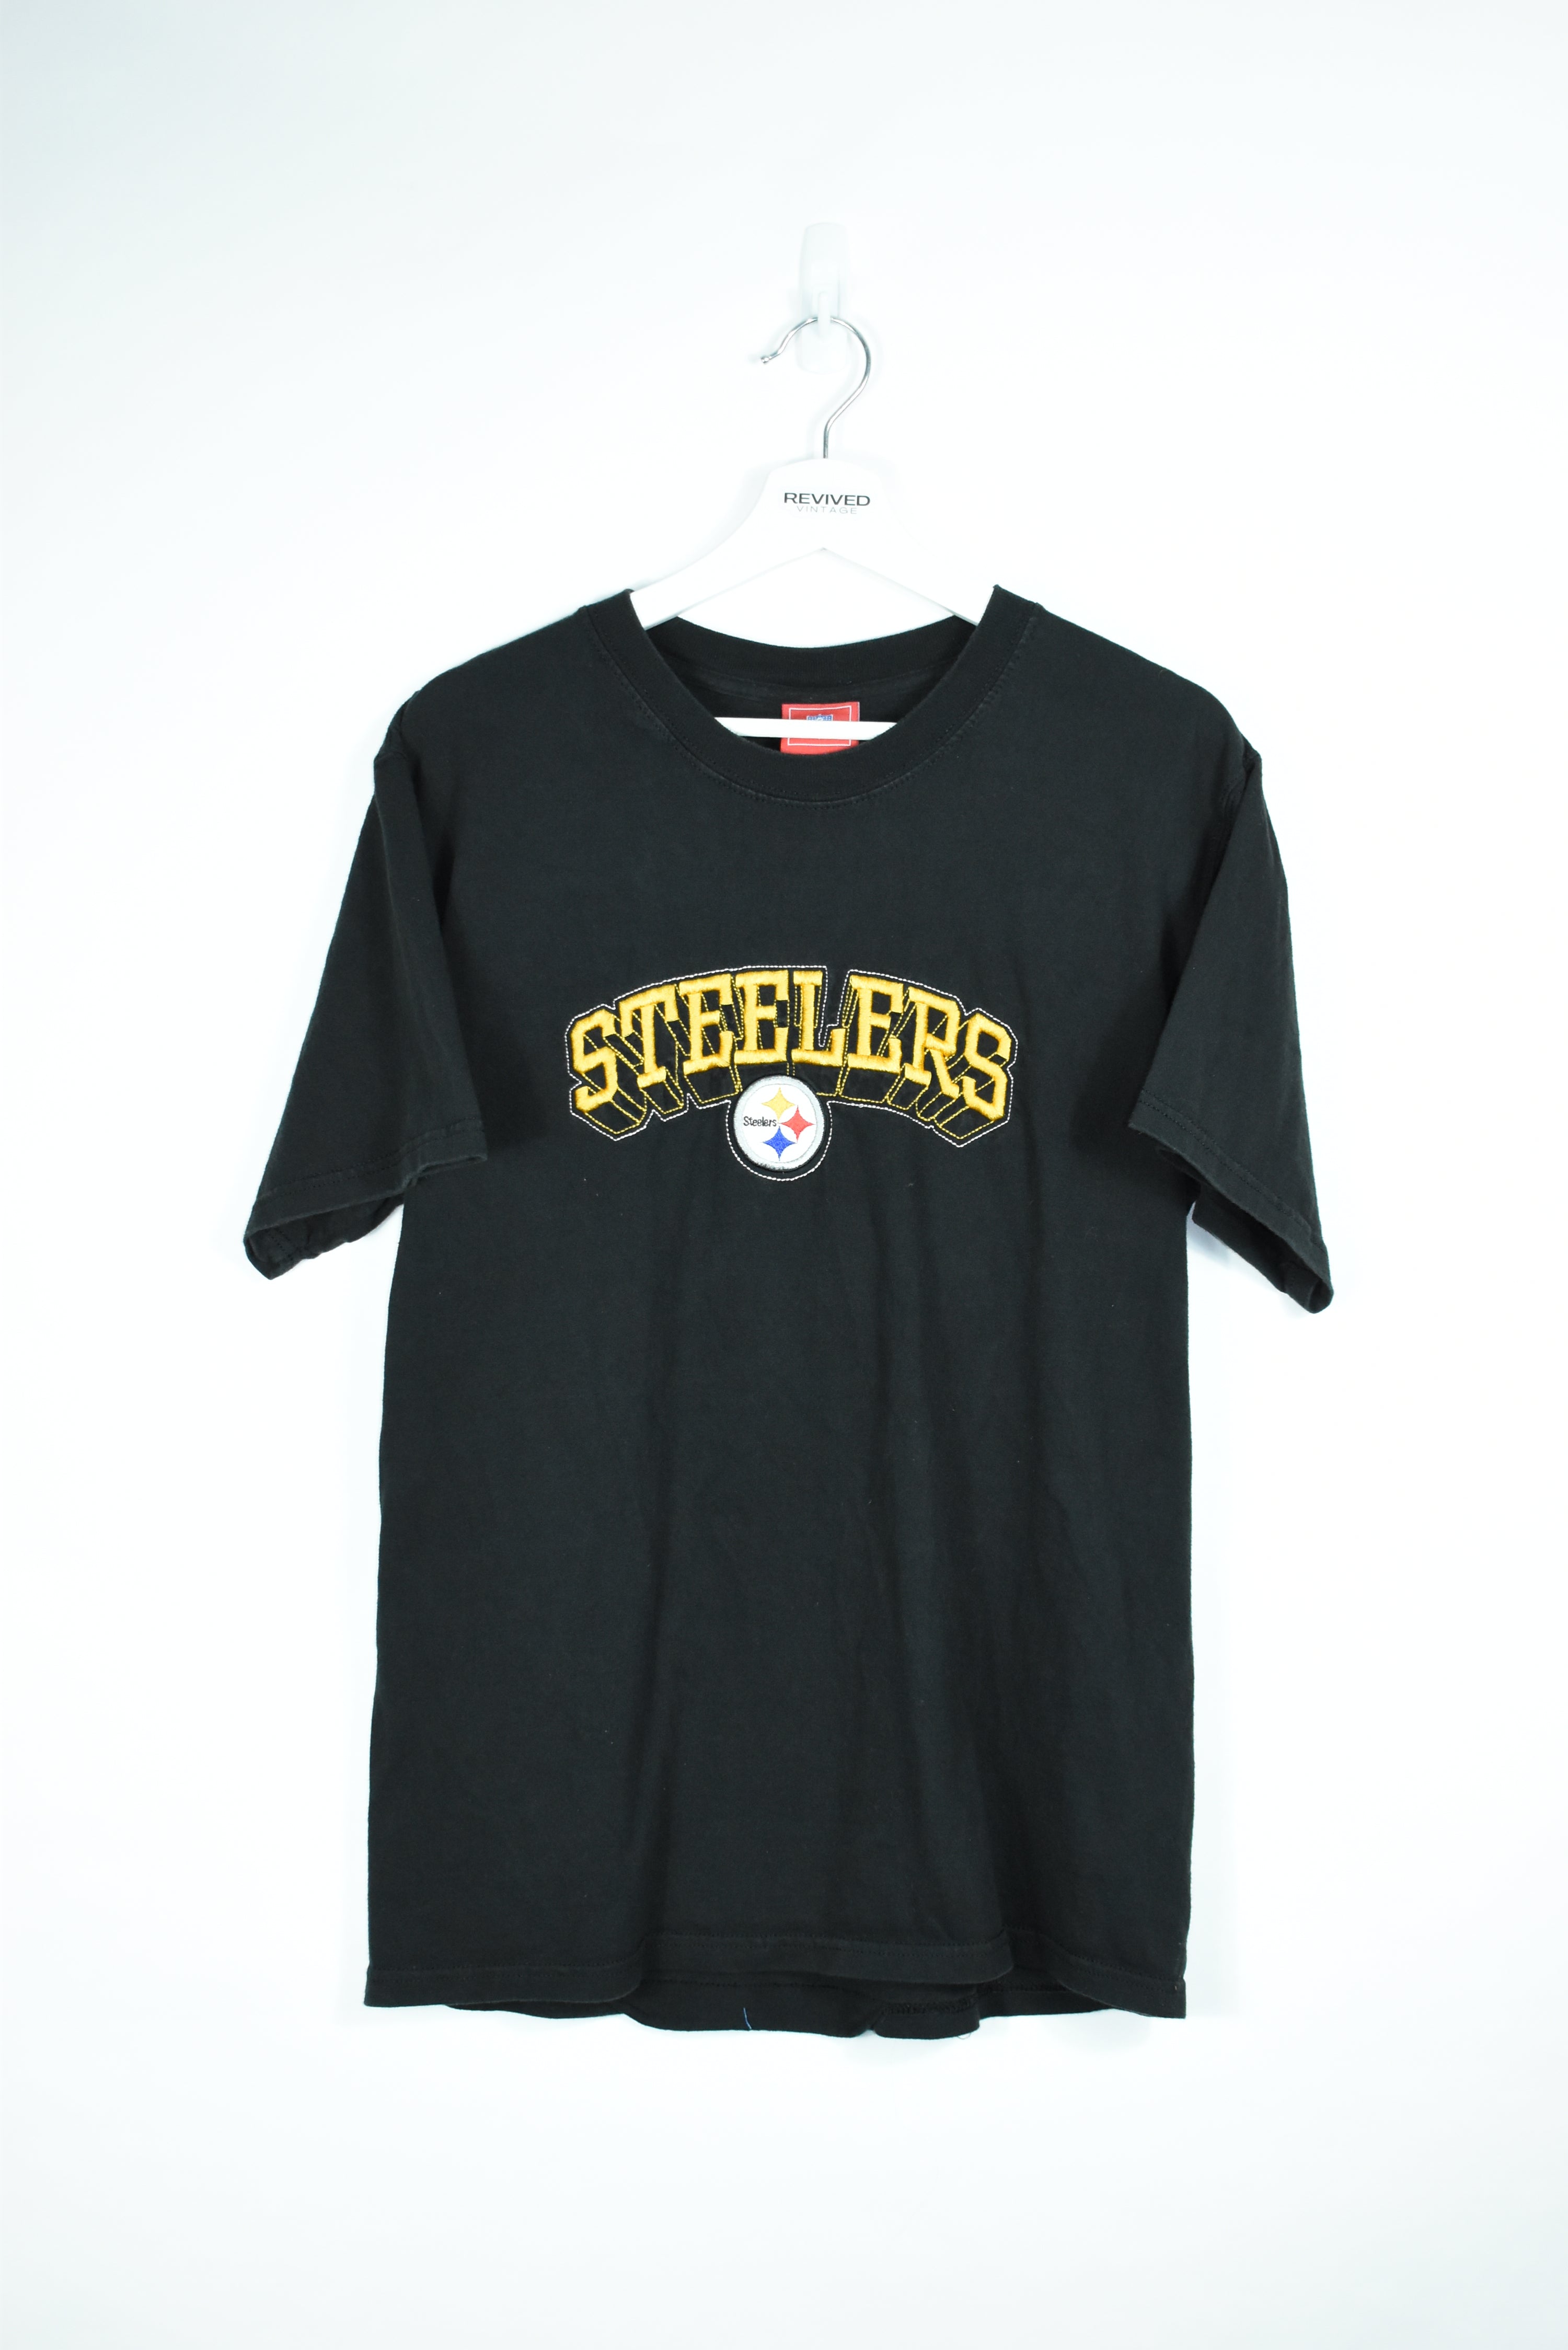 Vintage Steelers Embroidery 3D T Shirt MEDIUM